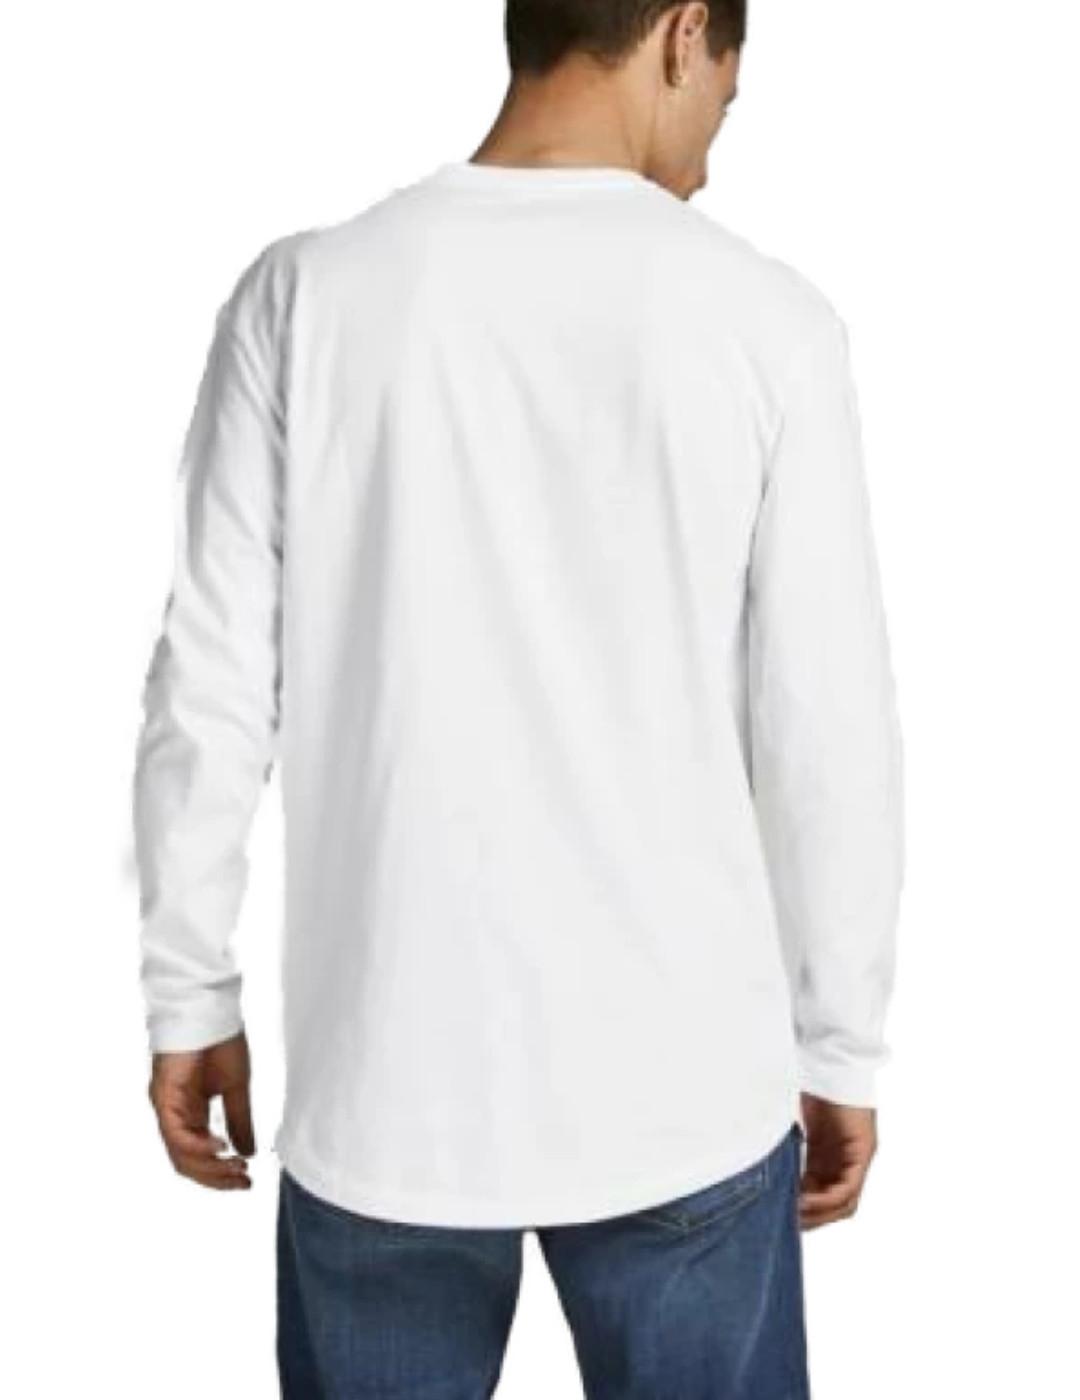 Camiseta Jack&Jones manga larga blanca hombre